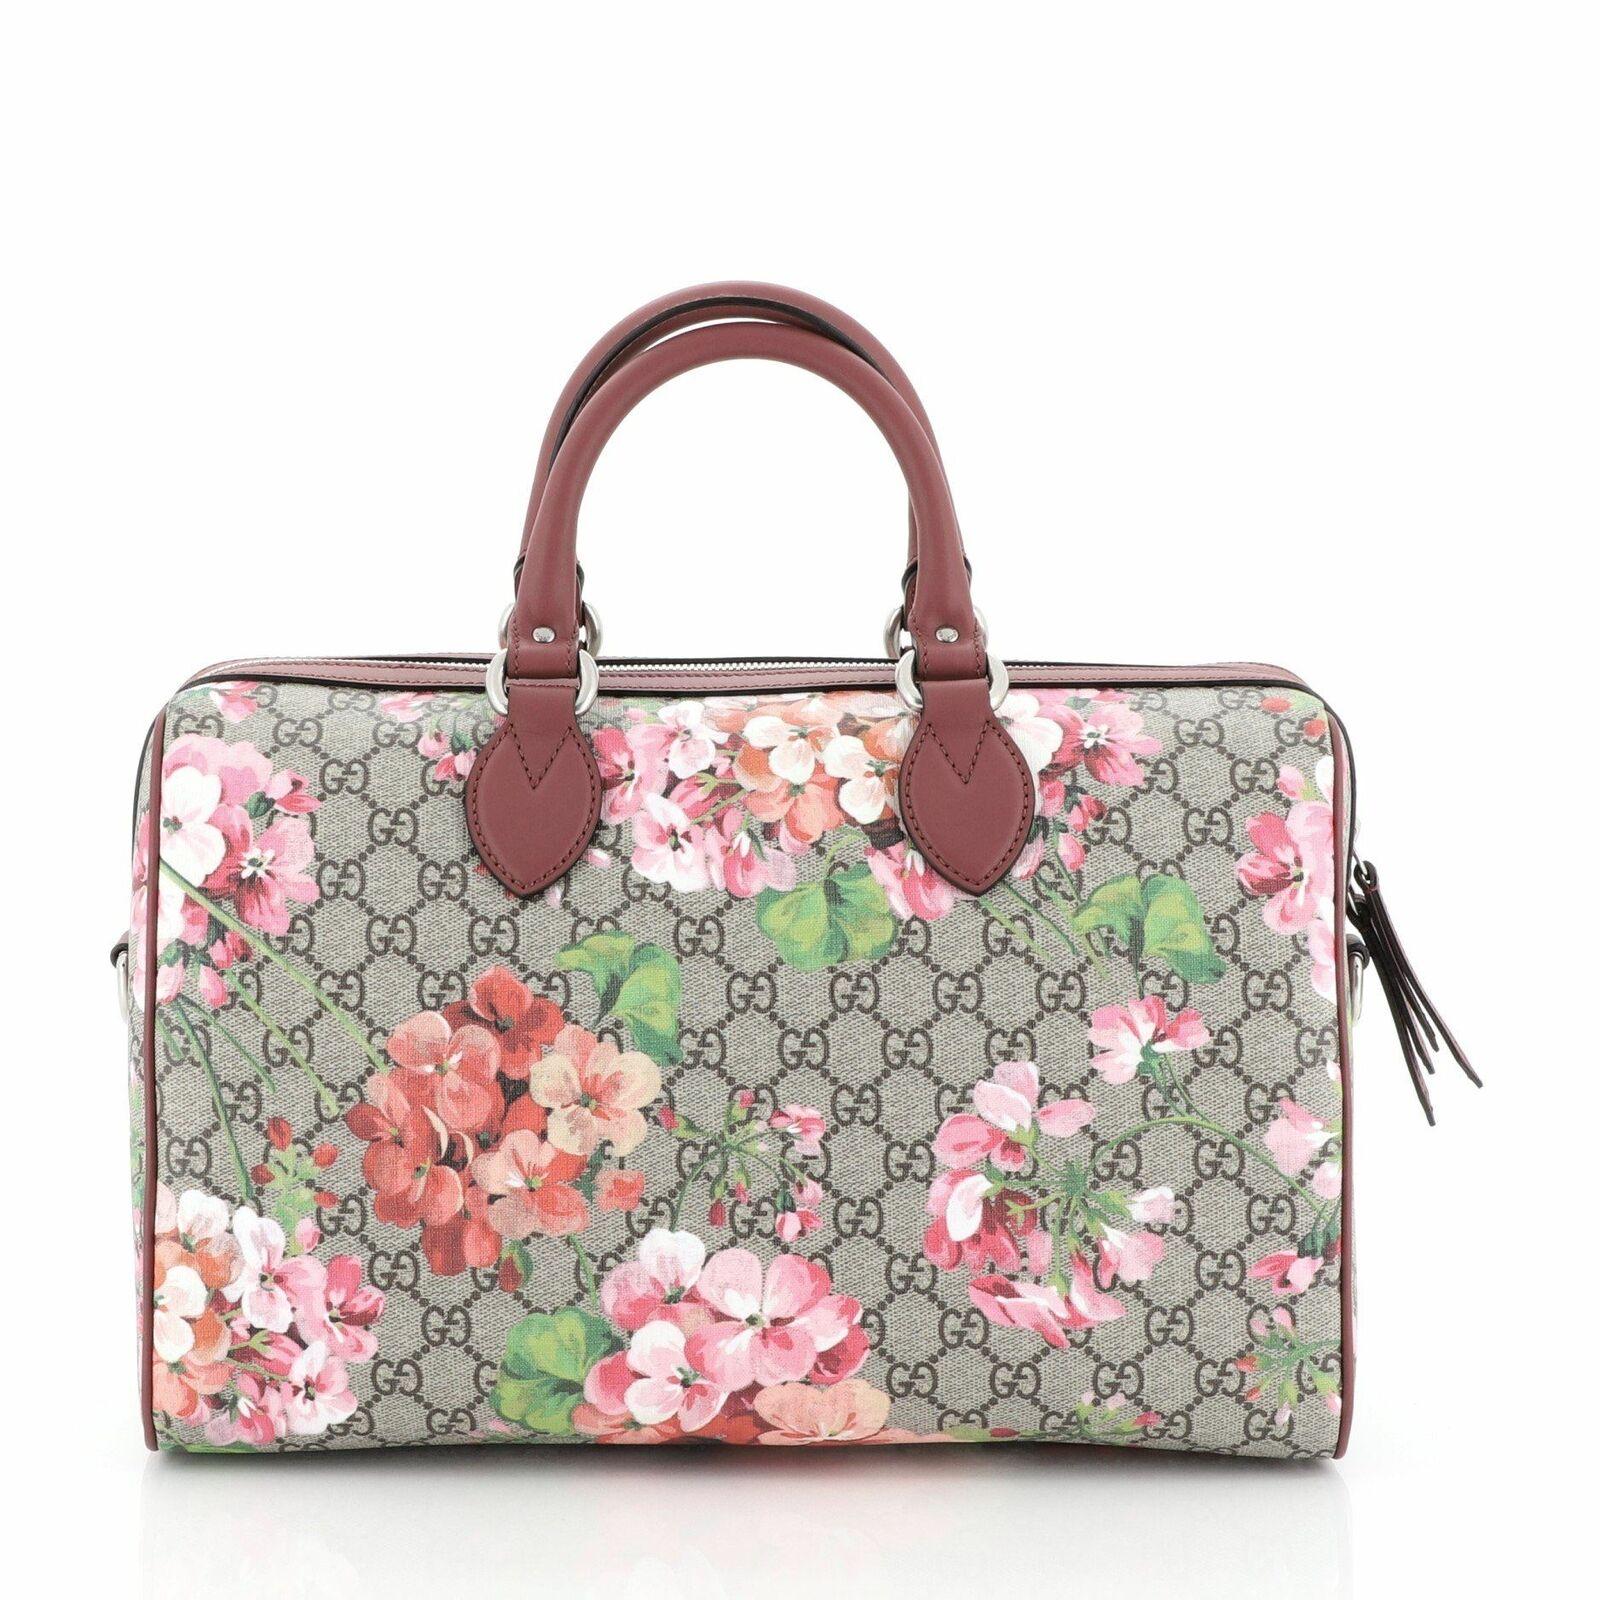 Hermes Birkin Price 2020 With Gucci Bloom Boston Bag - 0